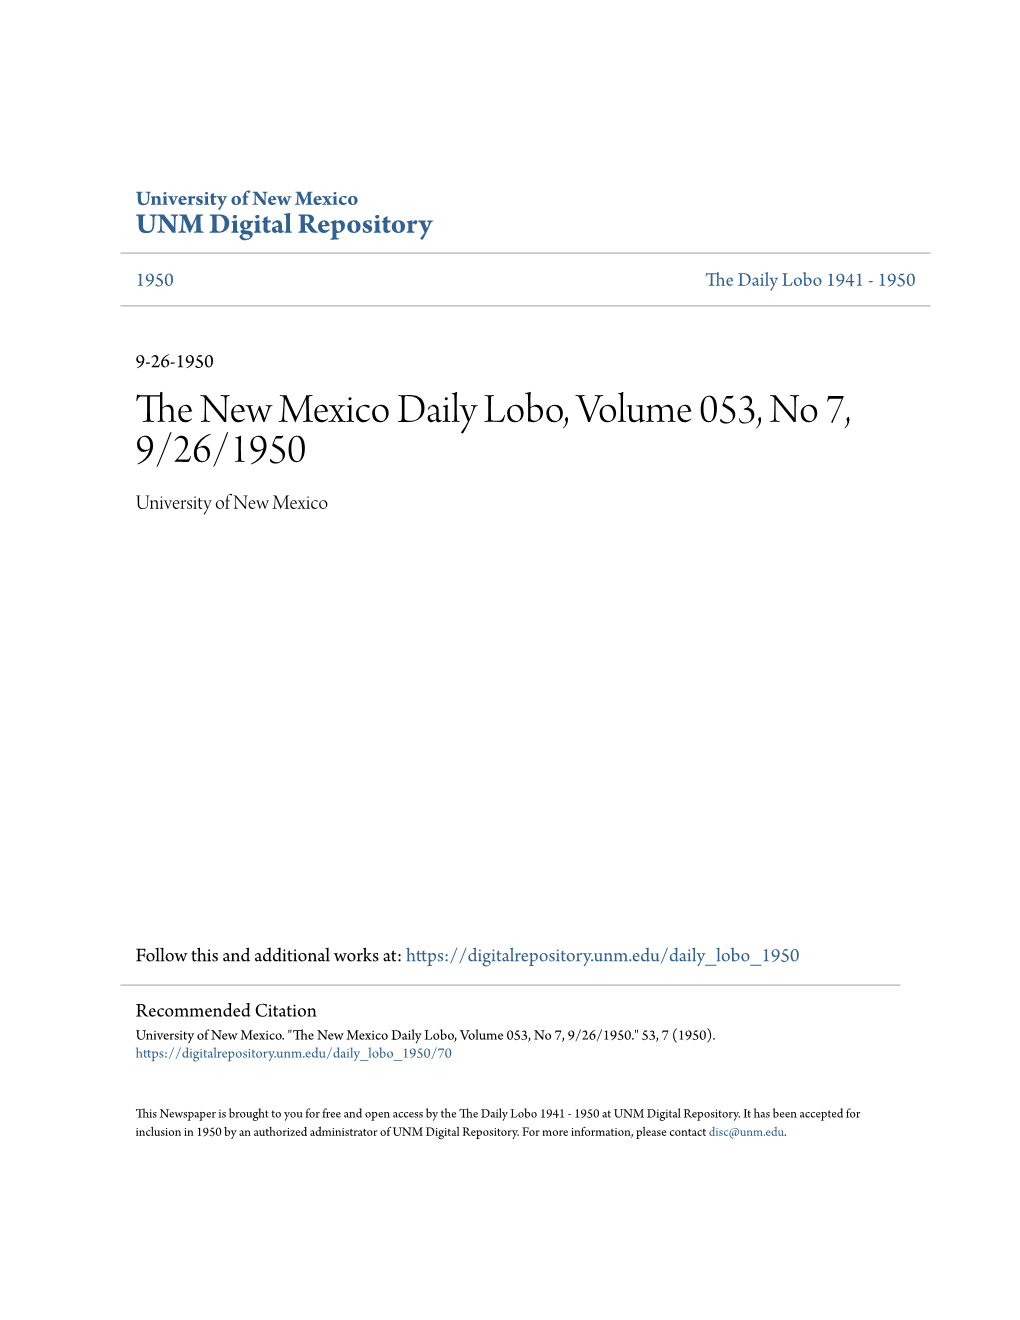 The New Mexico Daily Lobo, Volume 053, No 7, 9/26/1950